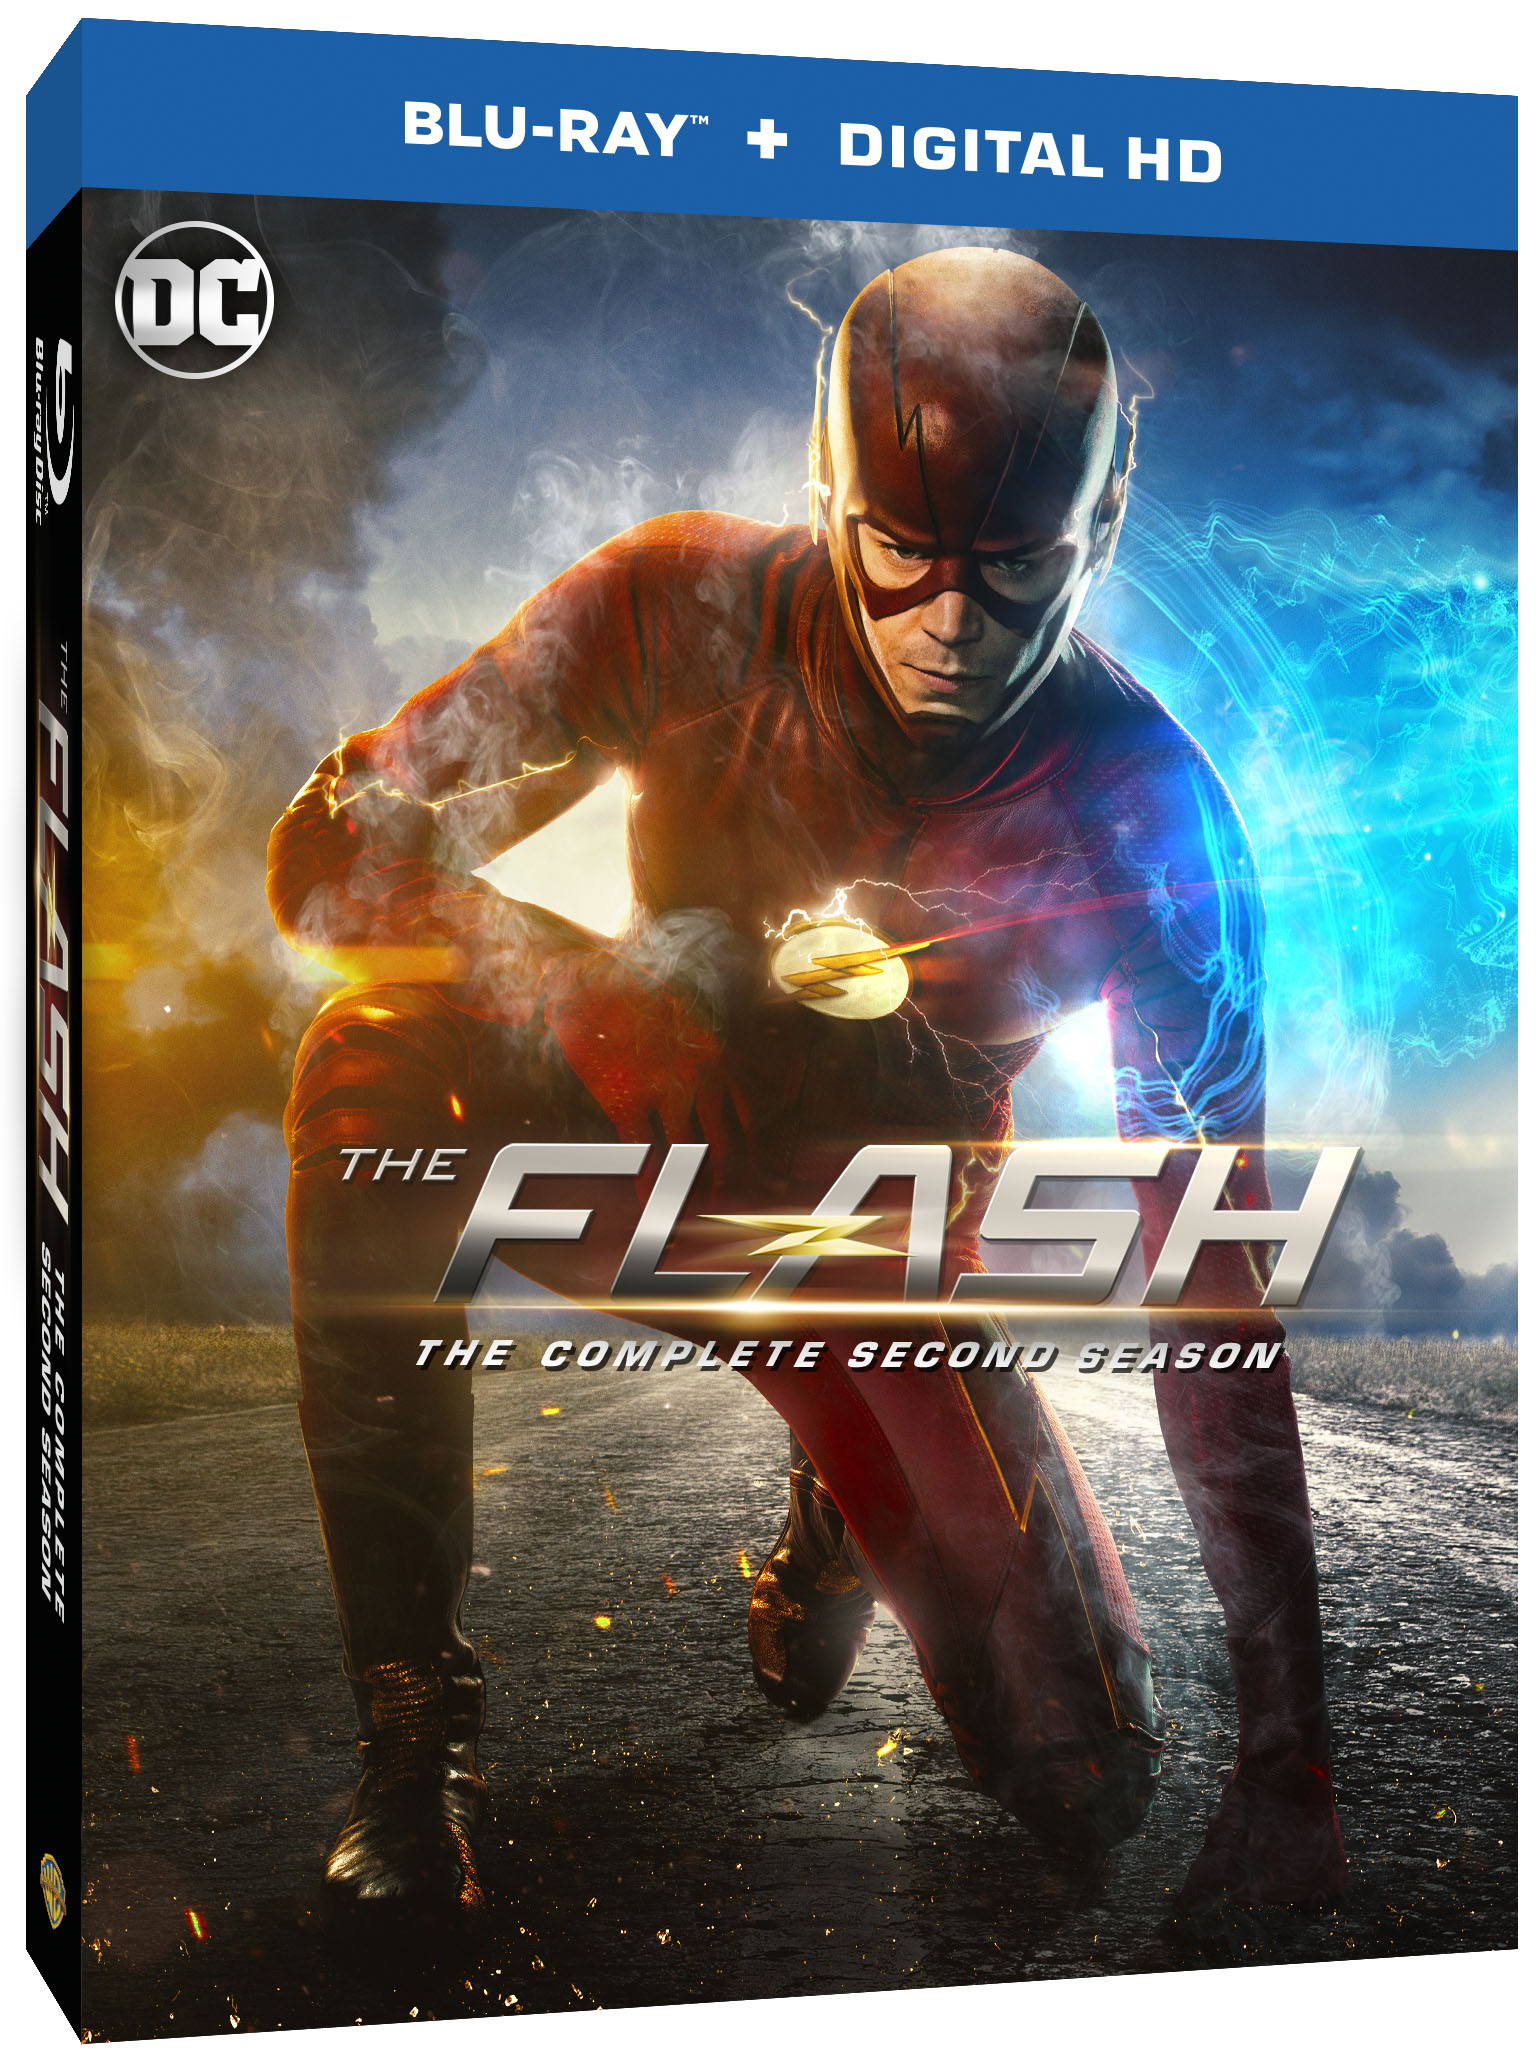 THE FLASH Final Season Coming To Blu-Ray This August - DC Comics News